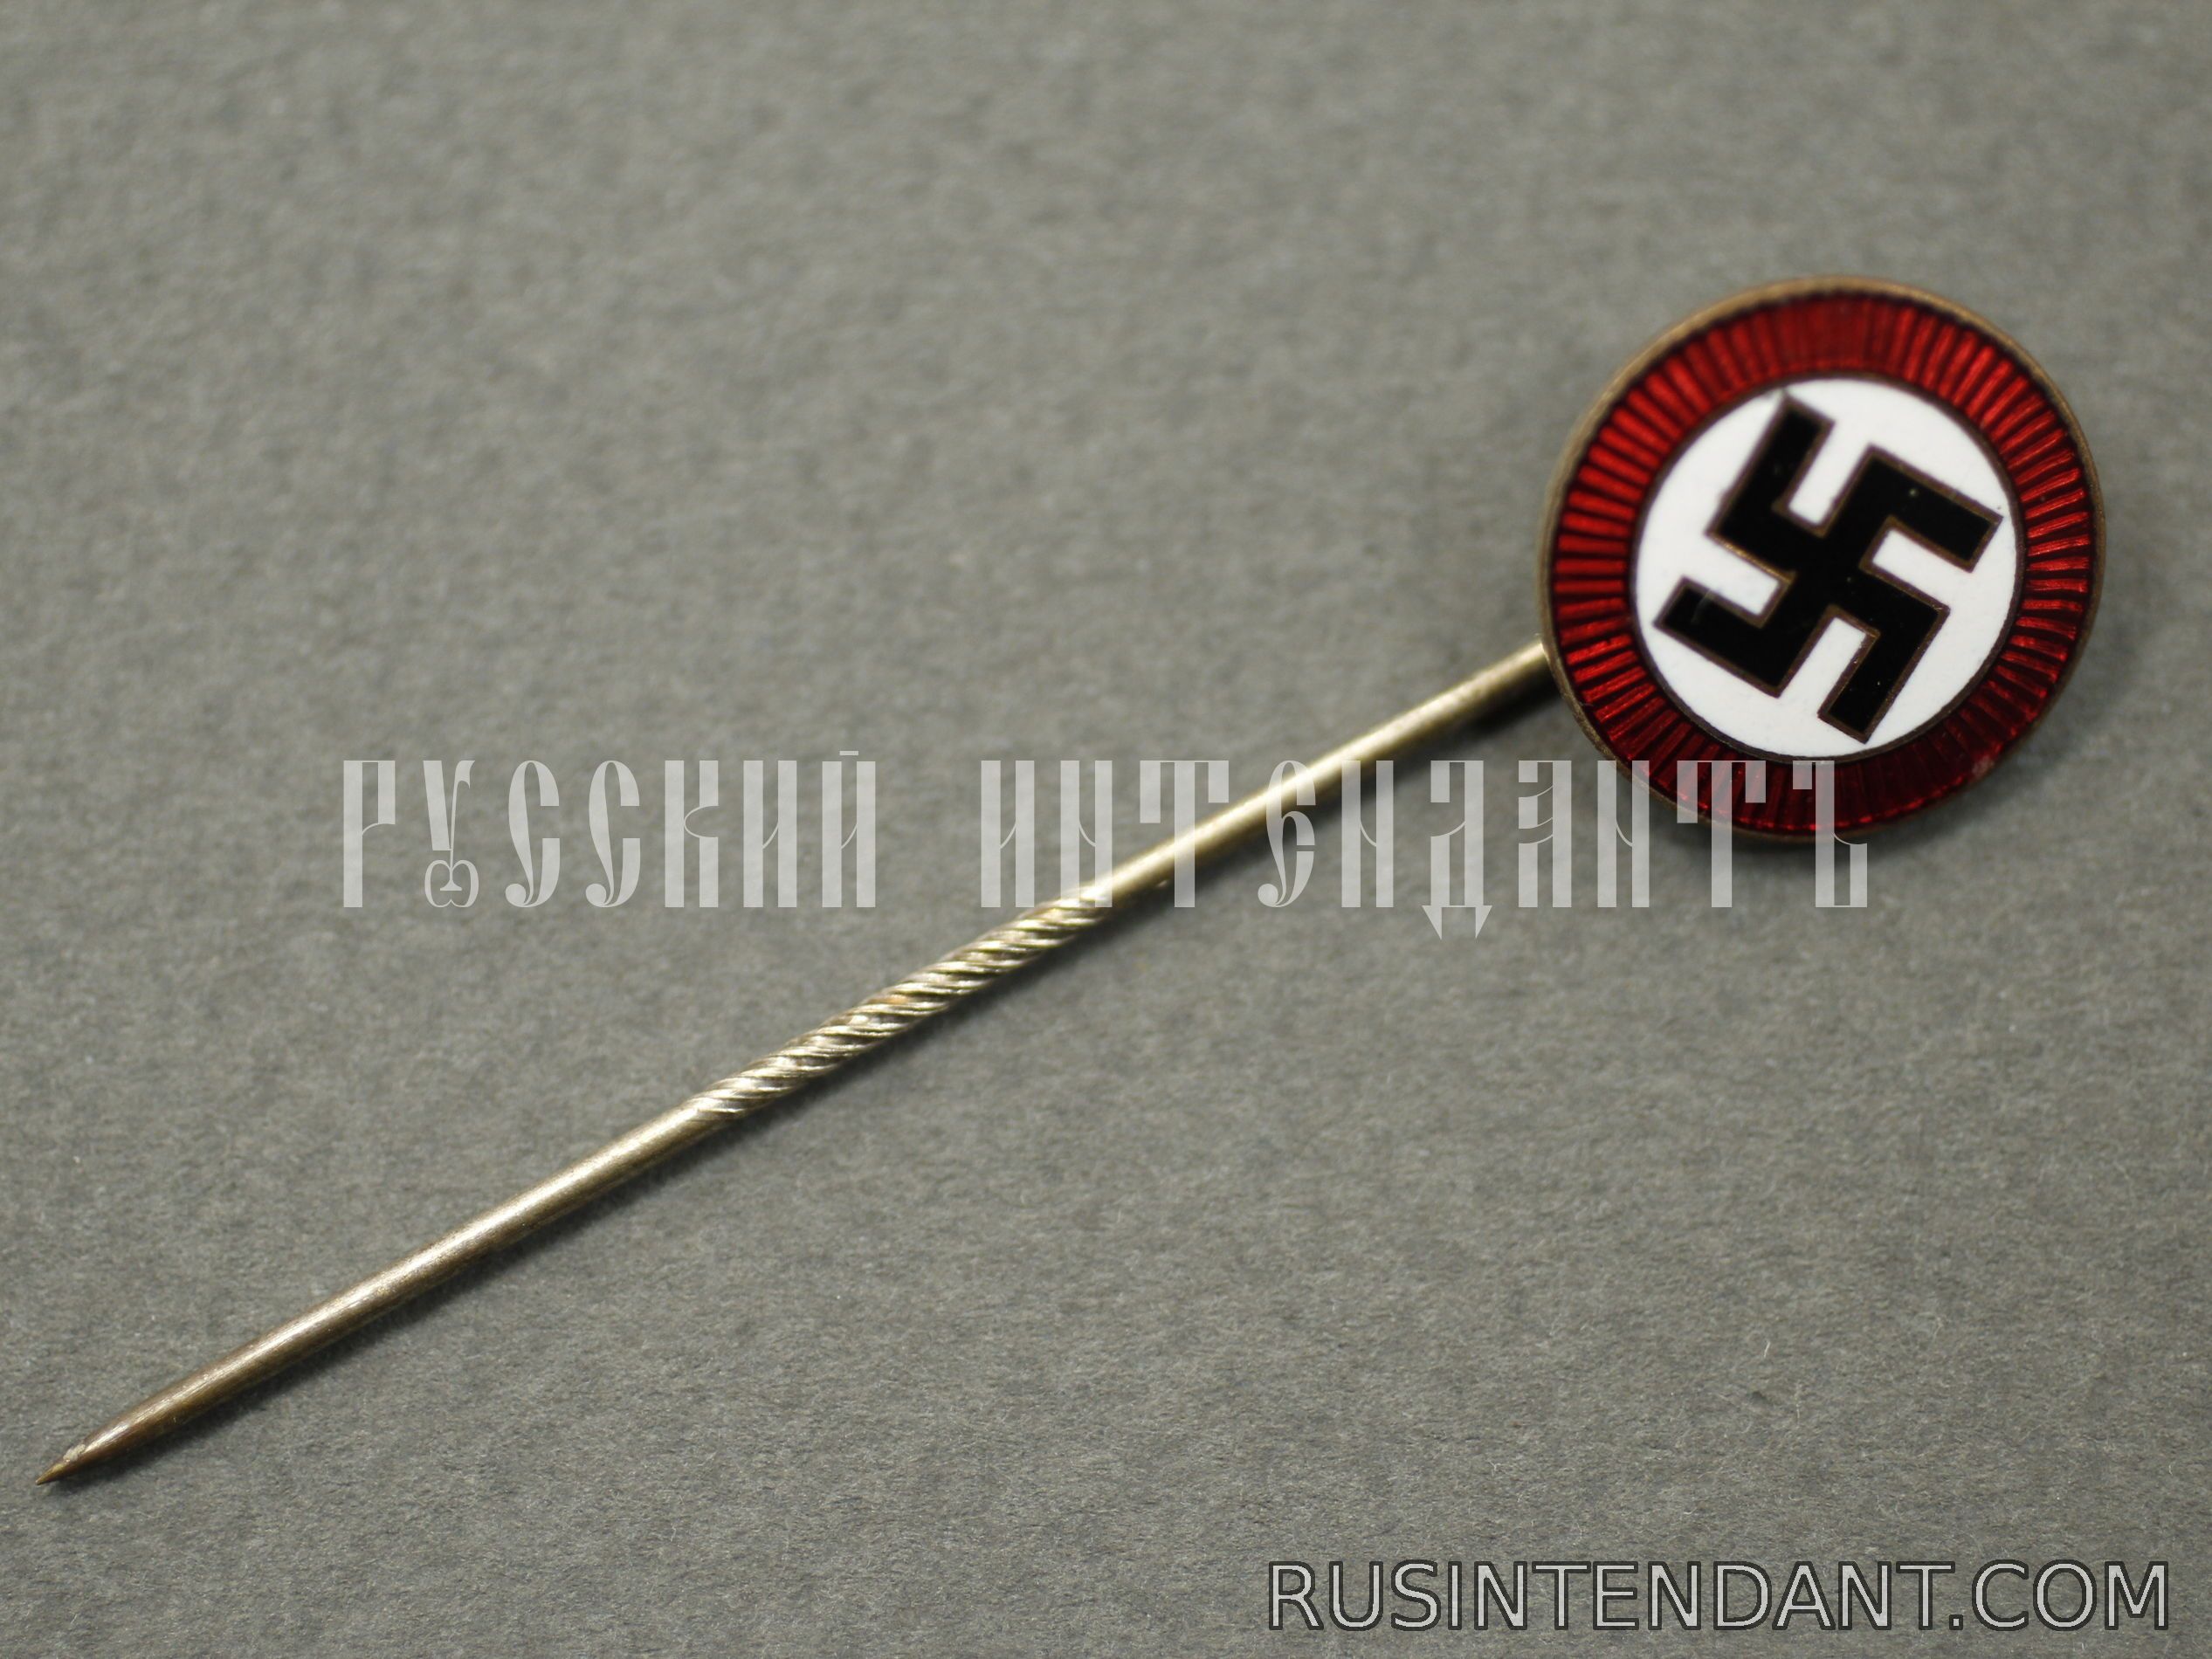 Фото 2: Пропагандистский знак NSDAP 